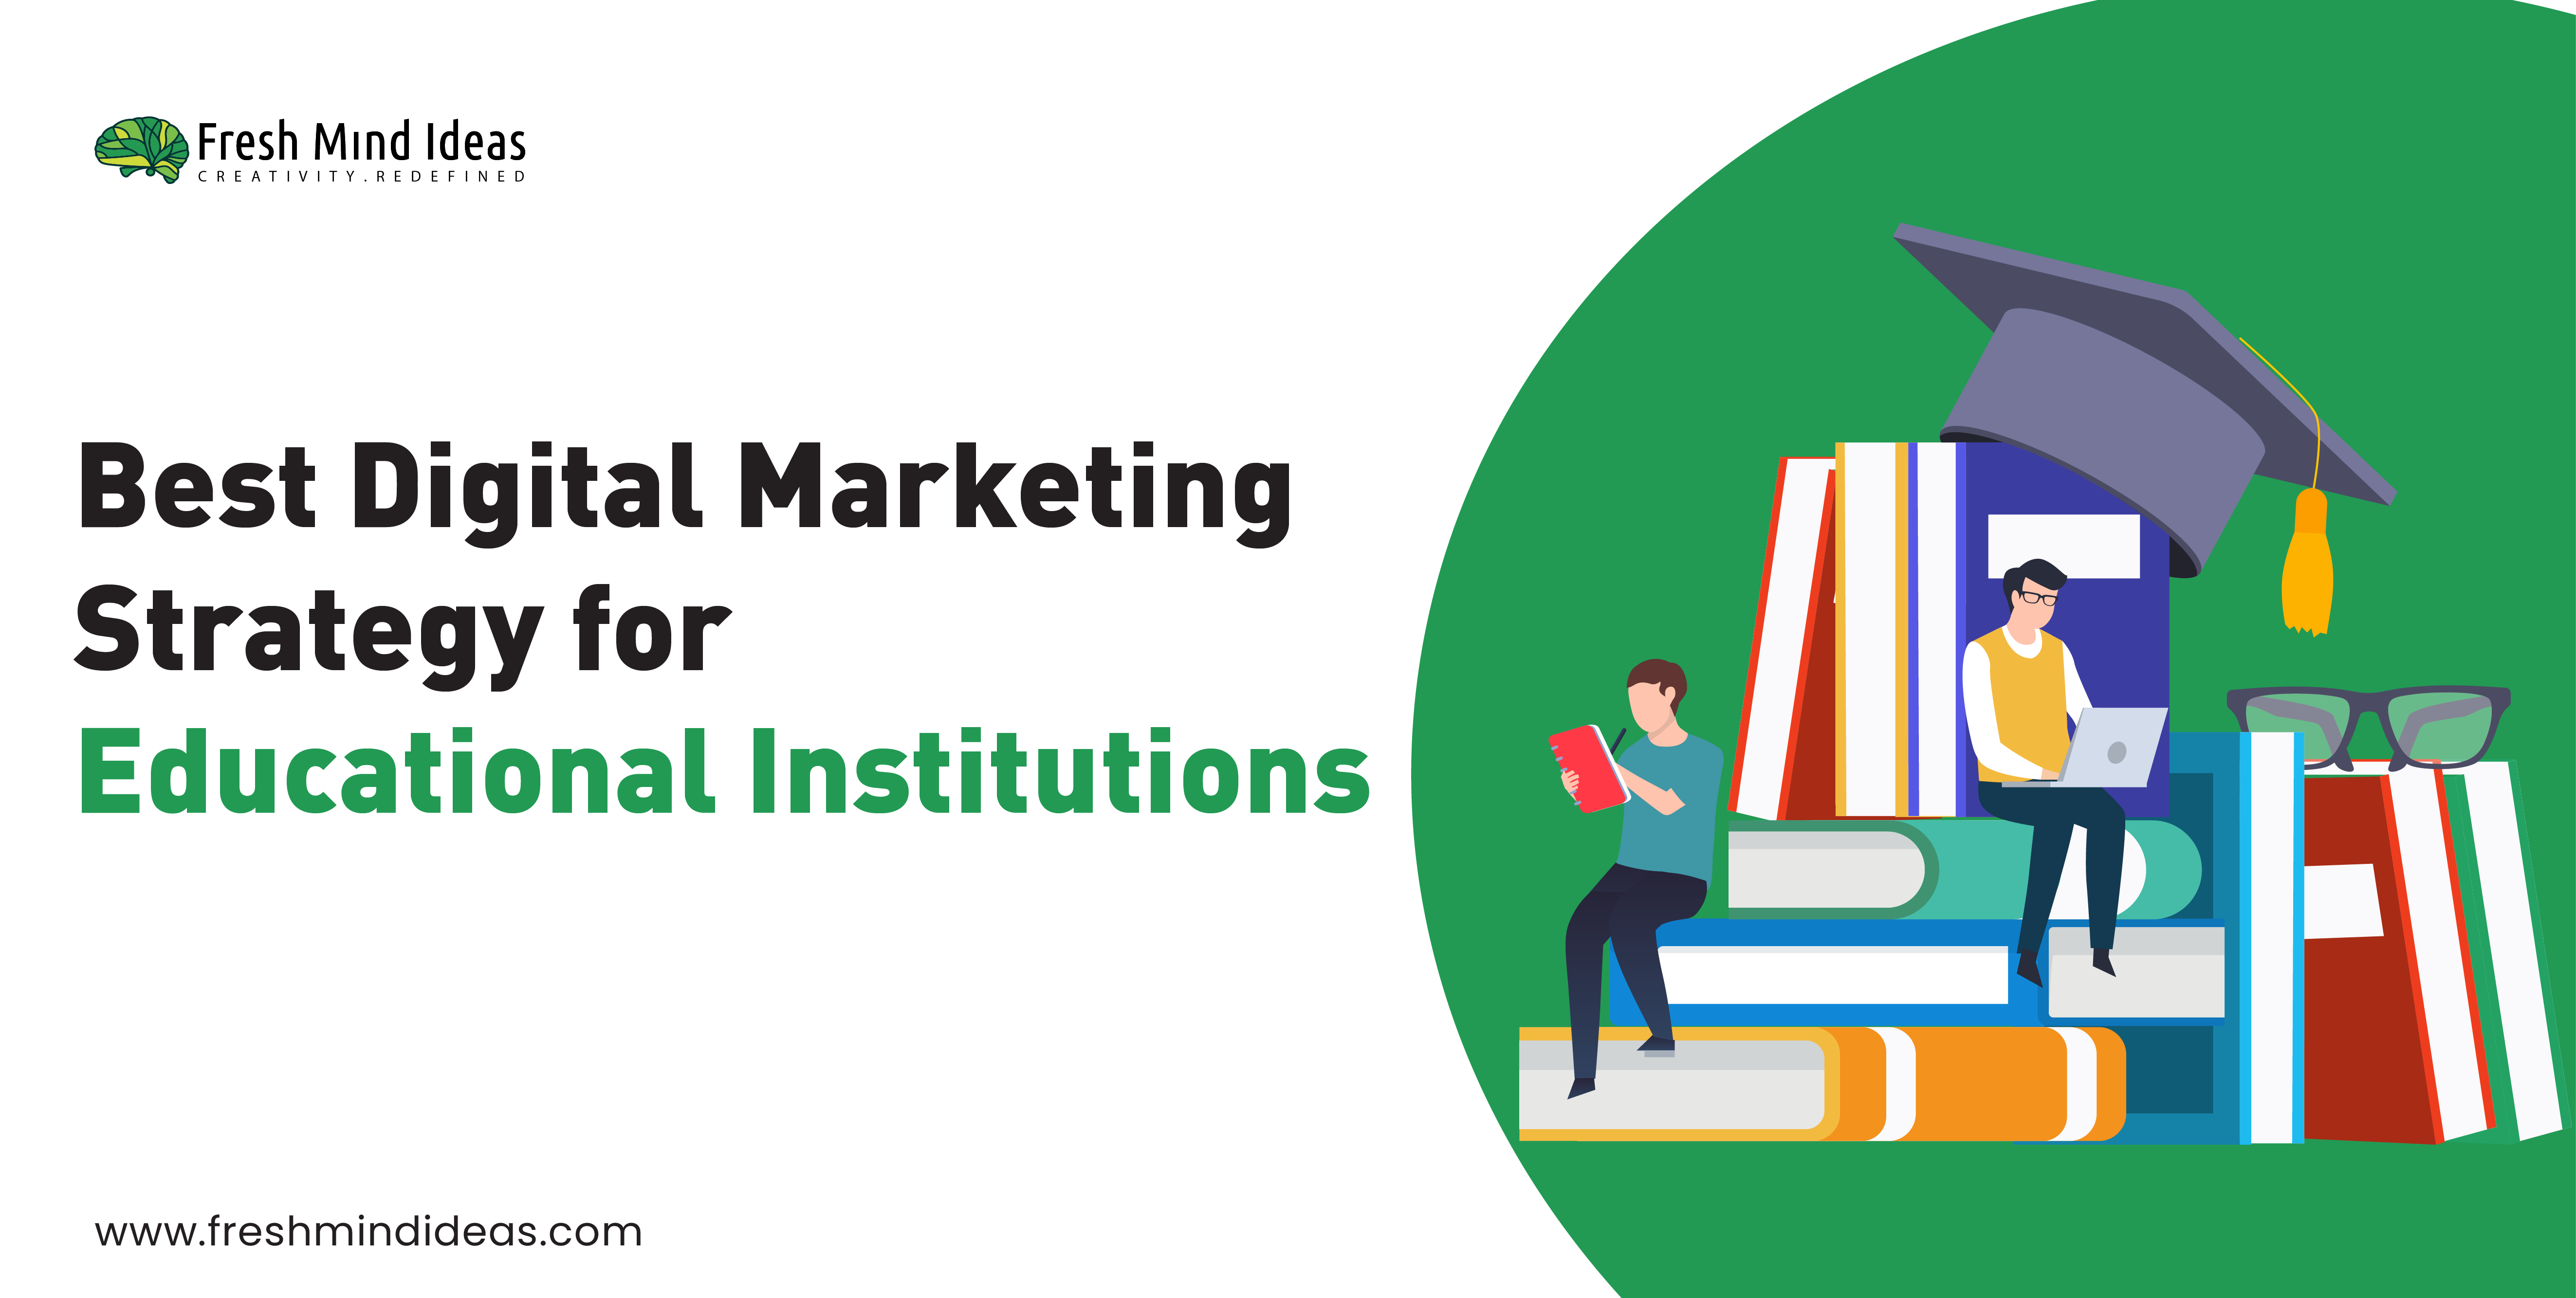 Digital marketing strategies for educational institutions